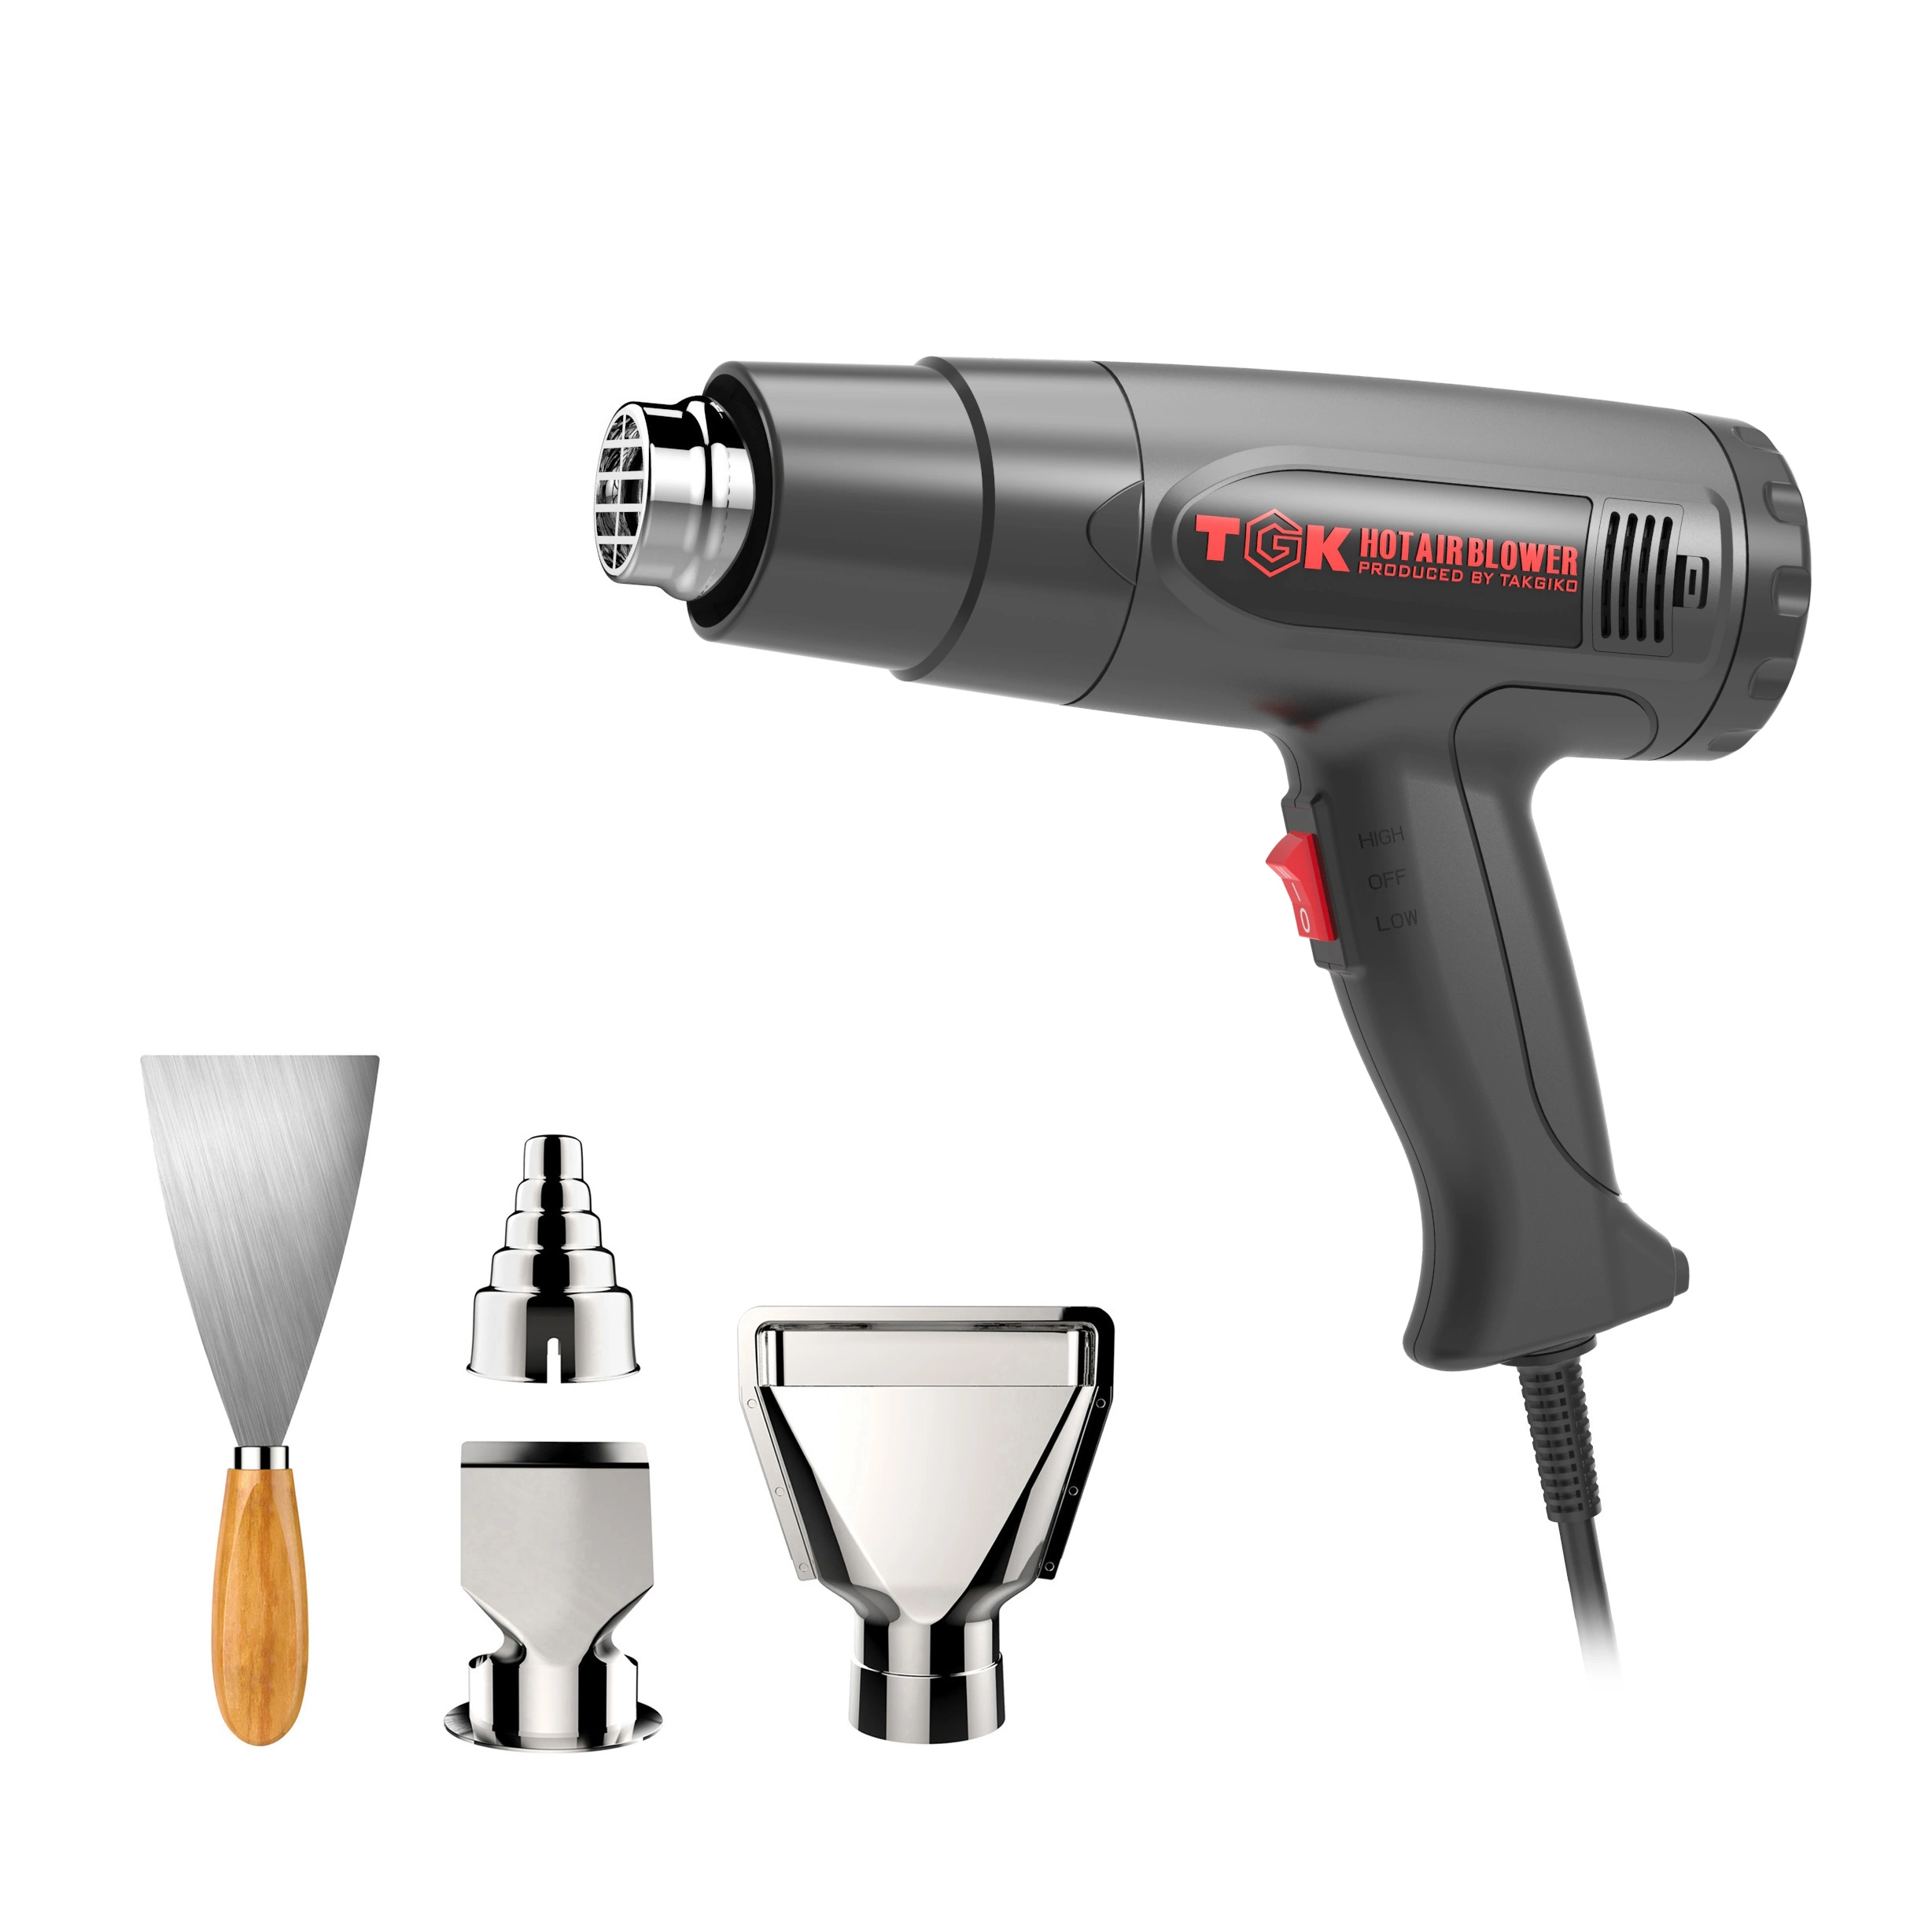 Paint Heat Gun for Tinting Windows or Automotive Plastic Repair Hg6618